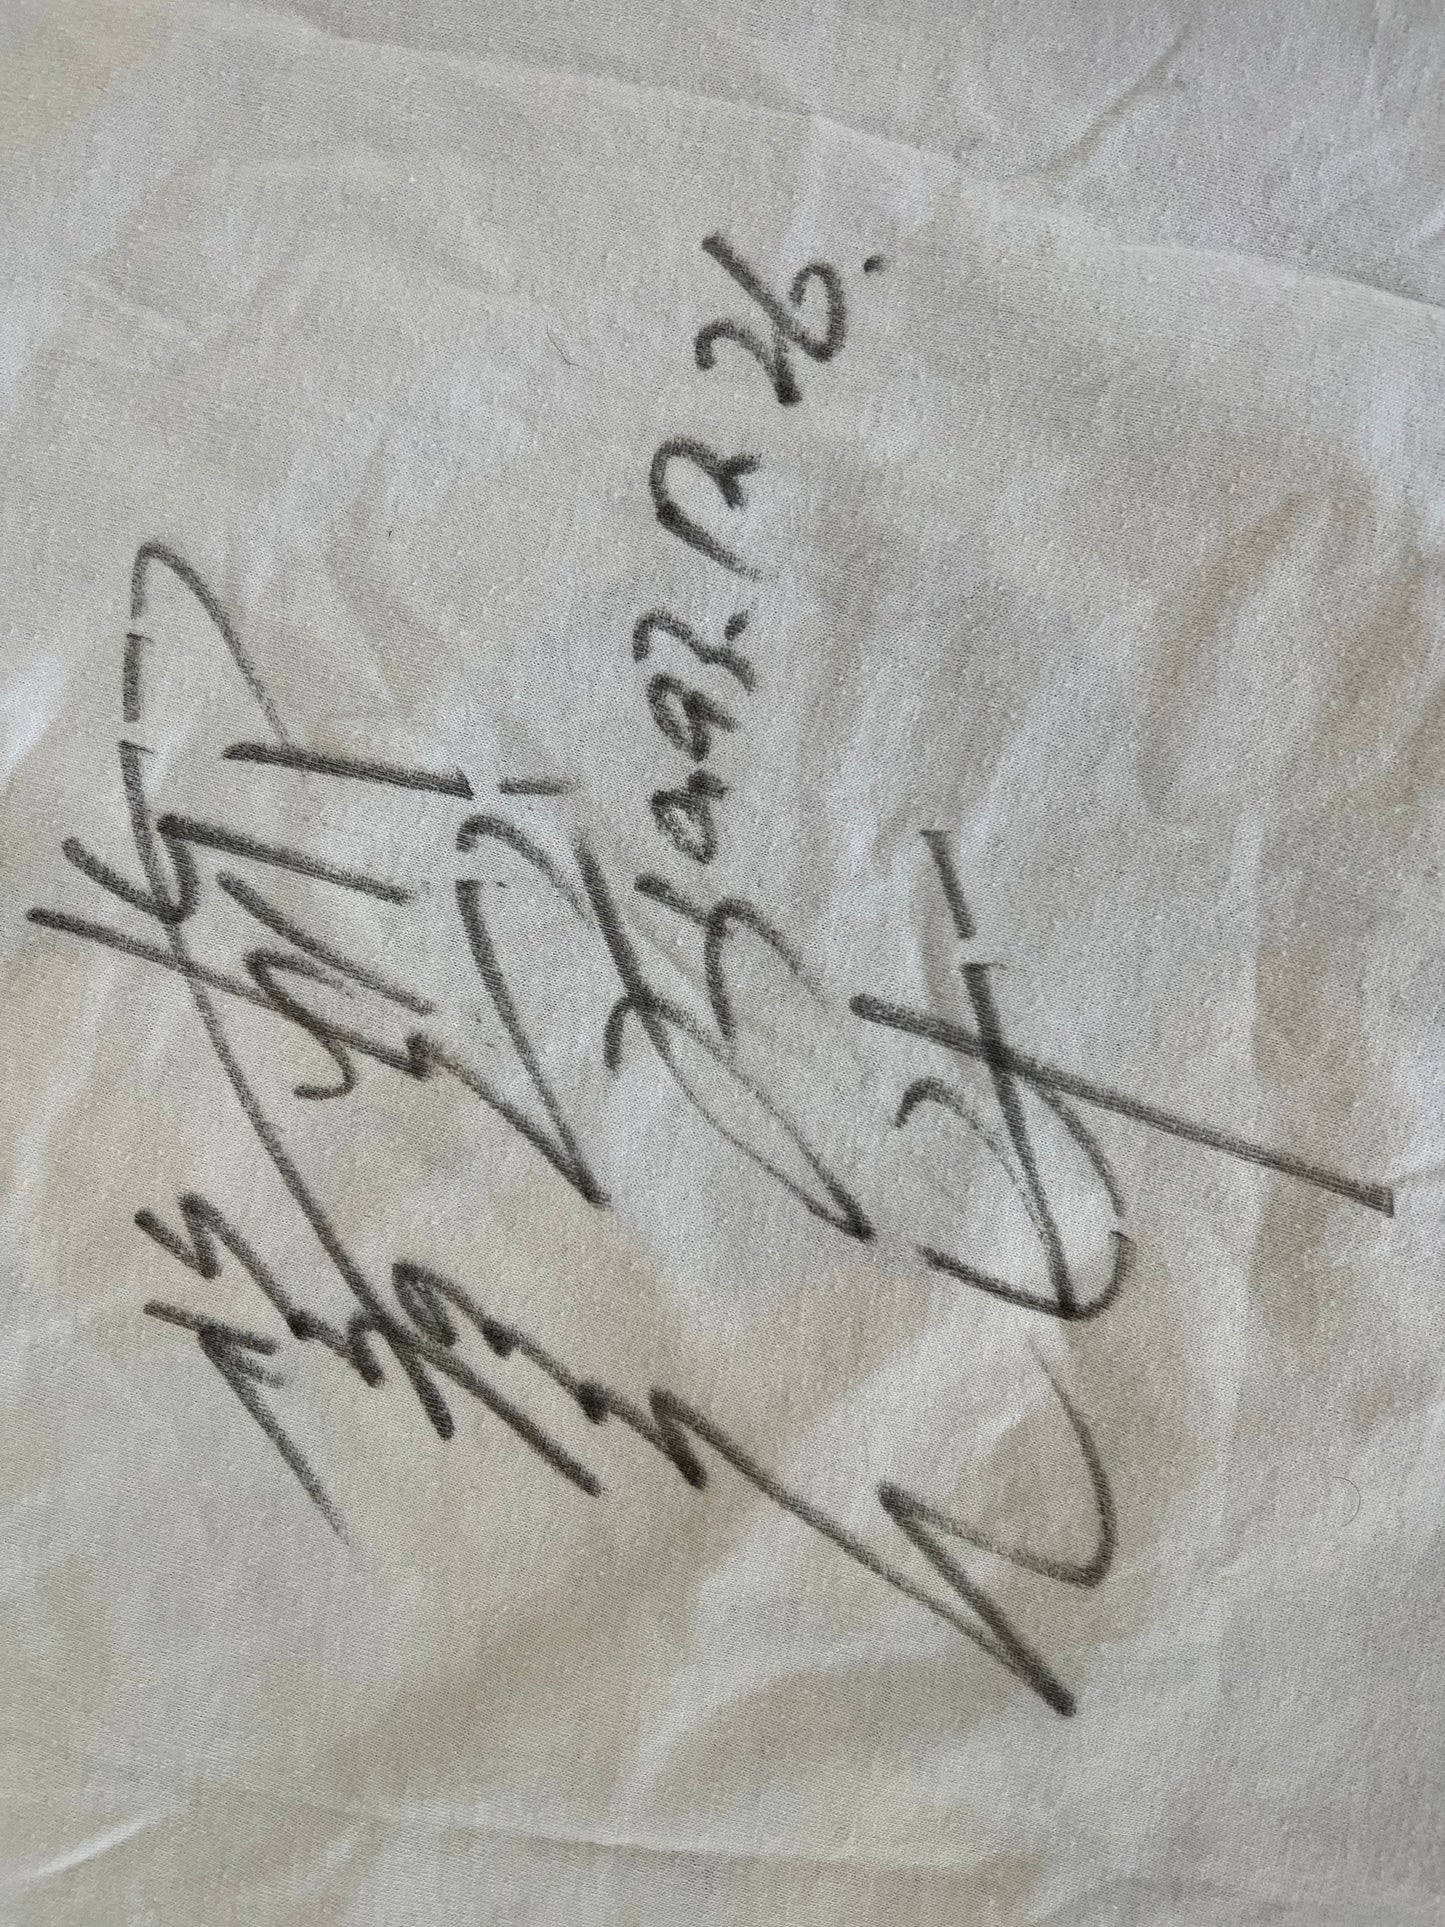 1992 NJPW Masahiro Chono NWA World Heavyweight Champion signed on the back (1993 signature)